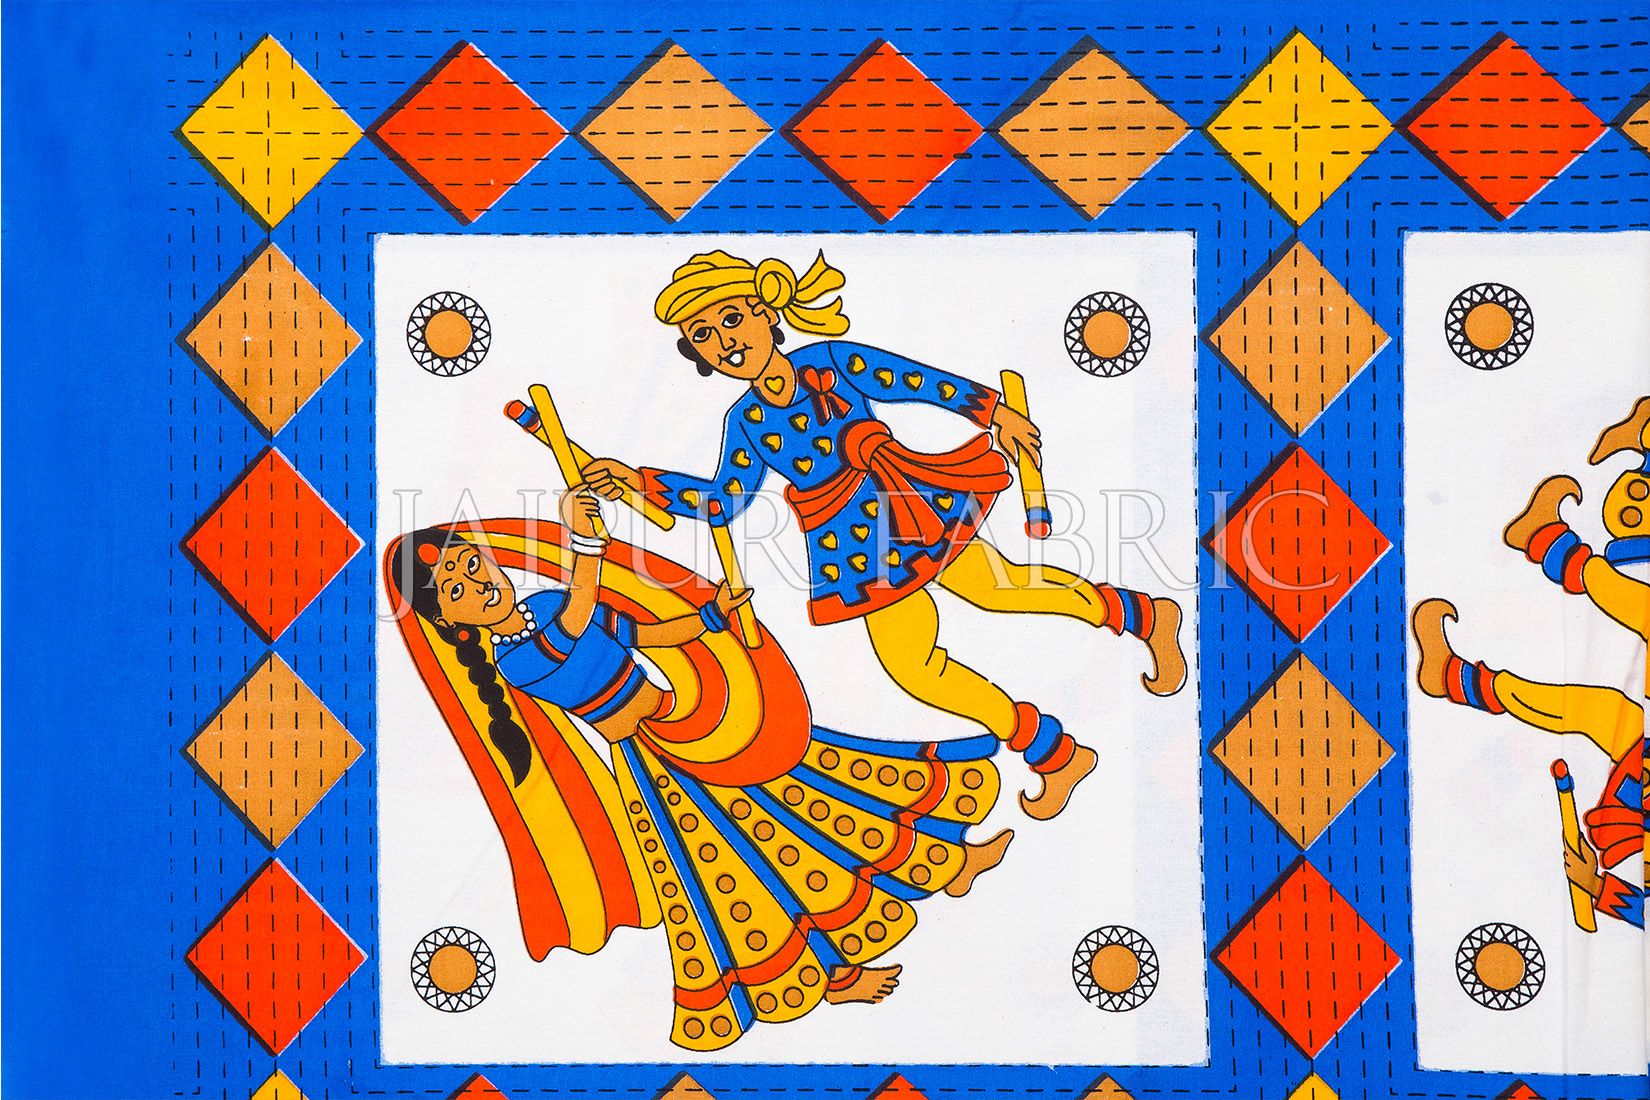 Blue Base Jaipuri Folk Dance Cotton Double Bed Sheet